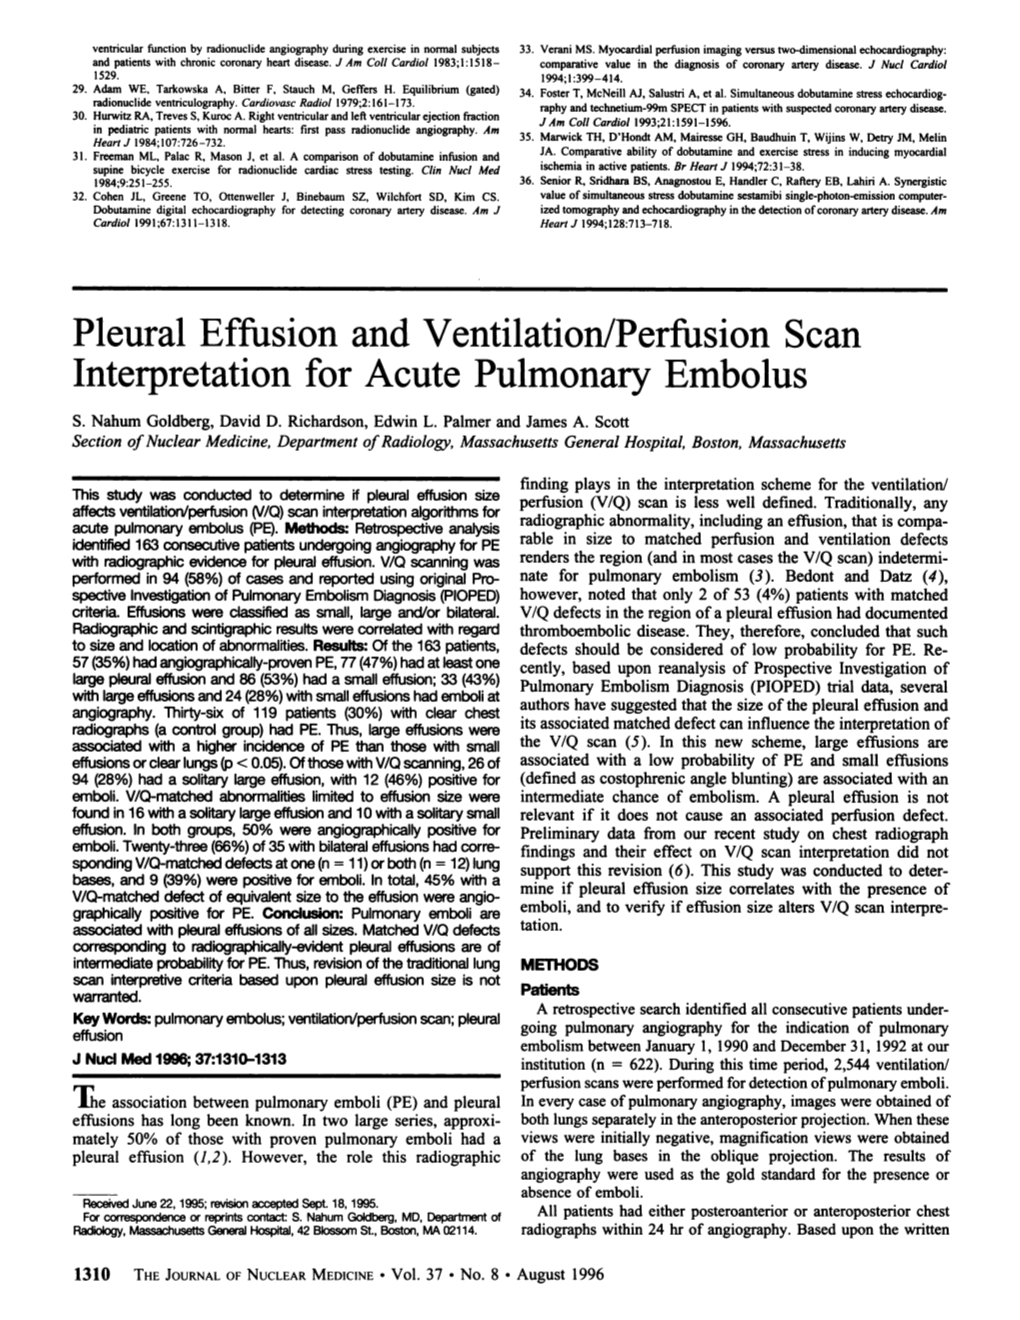 Pleural Effusion and Ventilation/Perfusion Scan Interpretation for Acute Pulmonary Embolus